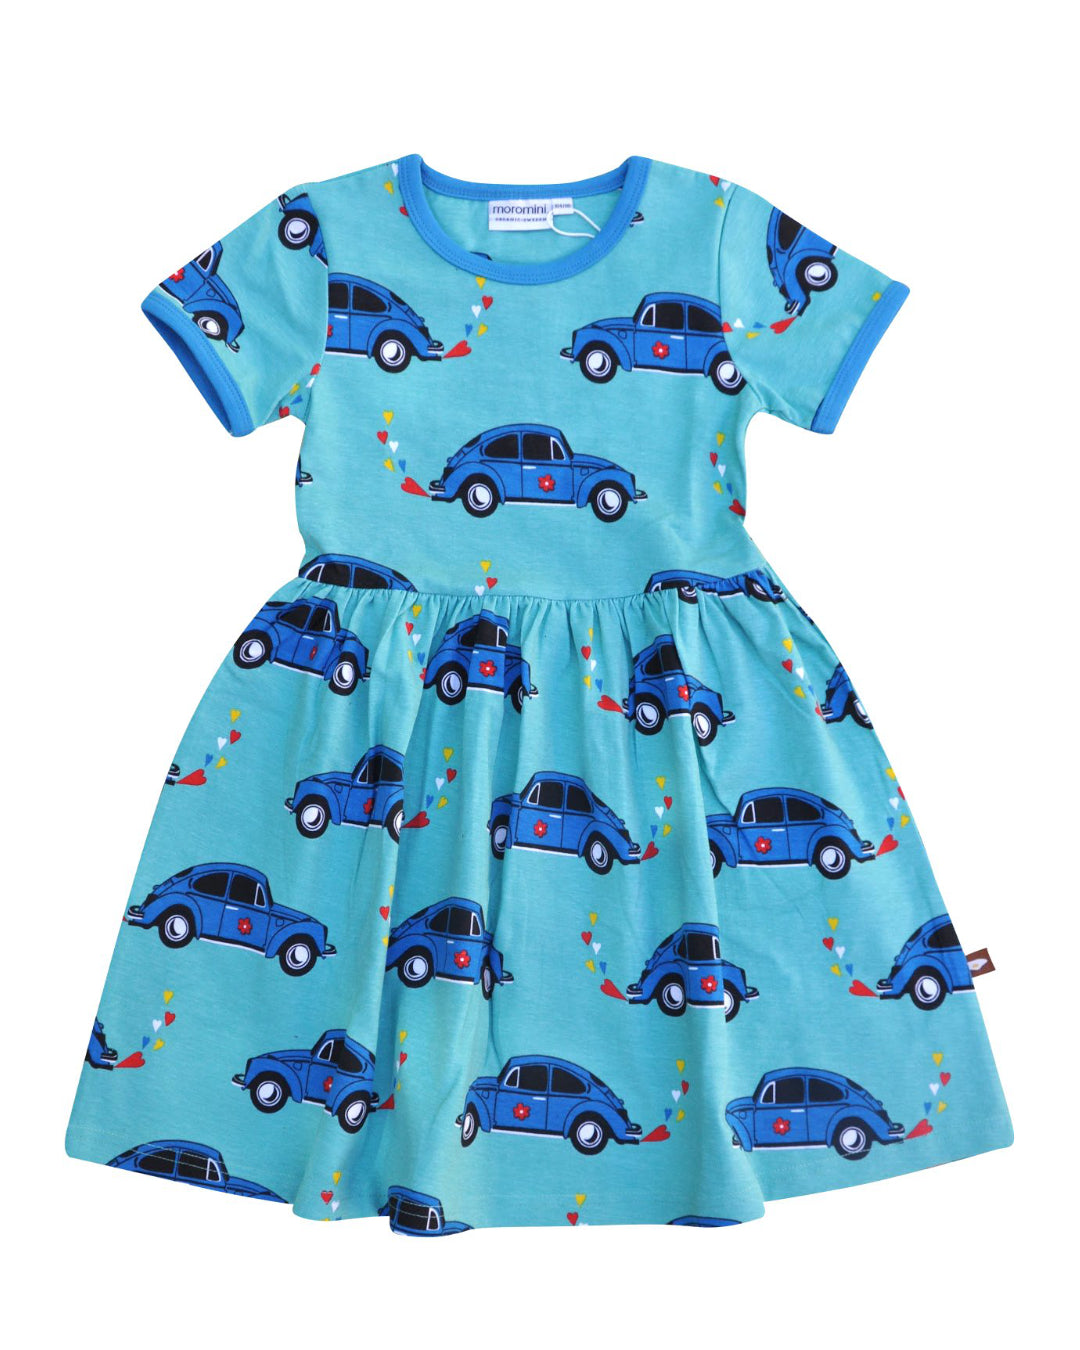 Blaues Kinder Kleid mit Beetle Print von moromini aus Biobaumwolle